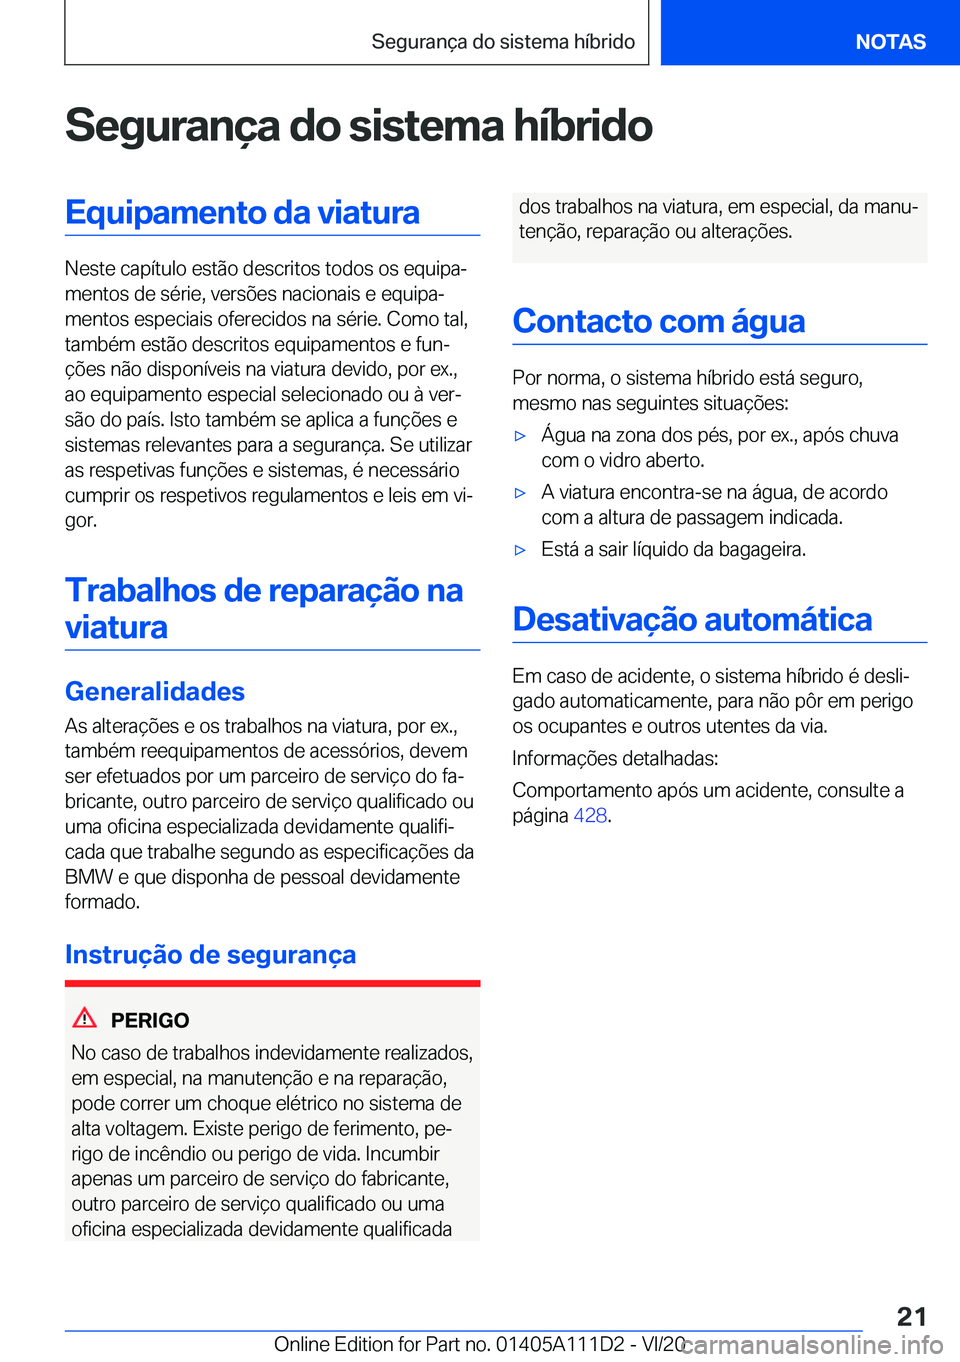 BMW 3 SERIES SEDAN PLUG-IN HYBRID 2021  Manual do condutor (in Portuguese) �S�e�g�u�r�a�n�